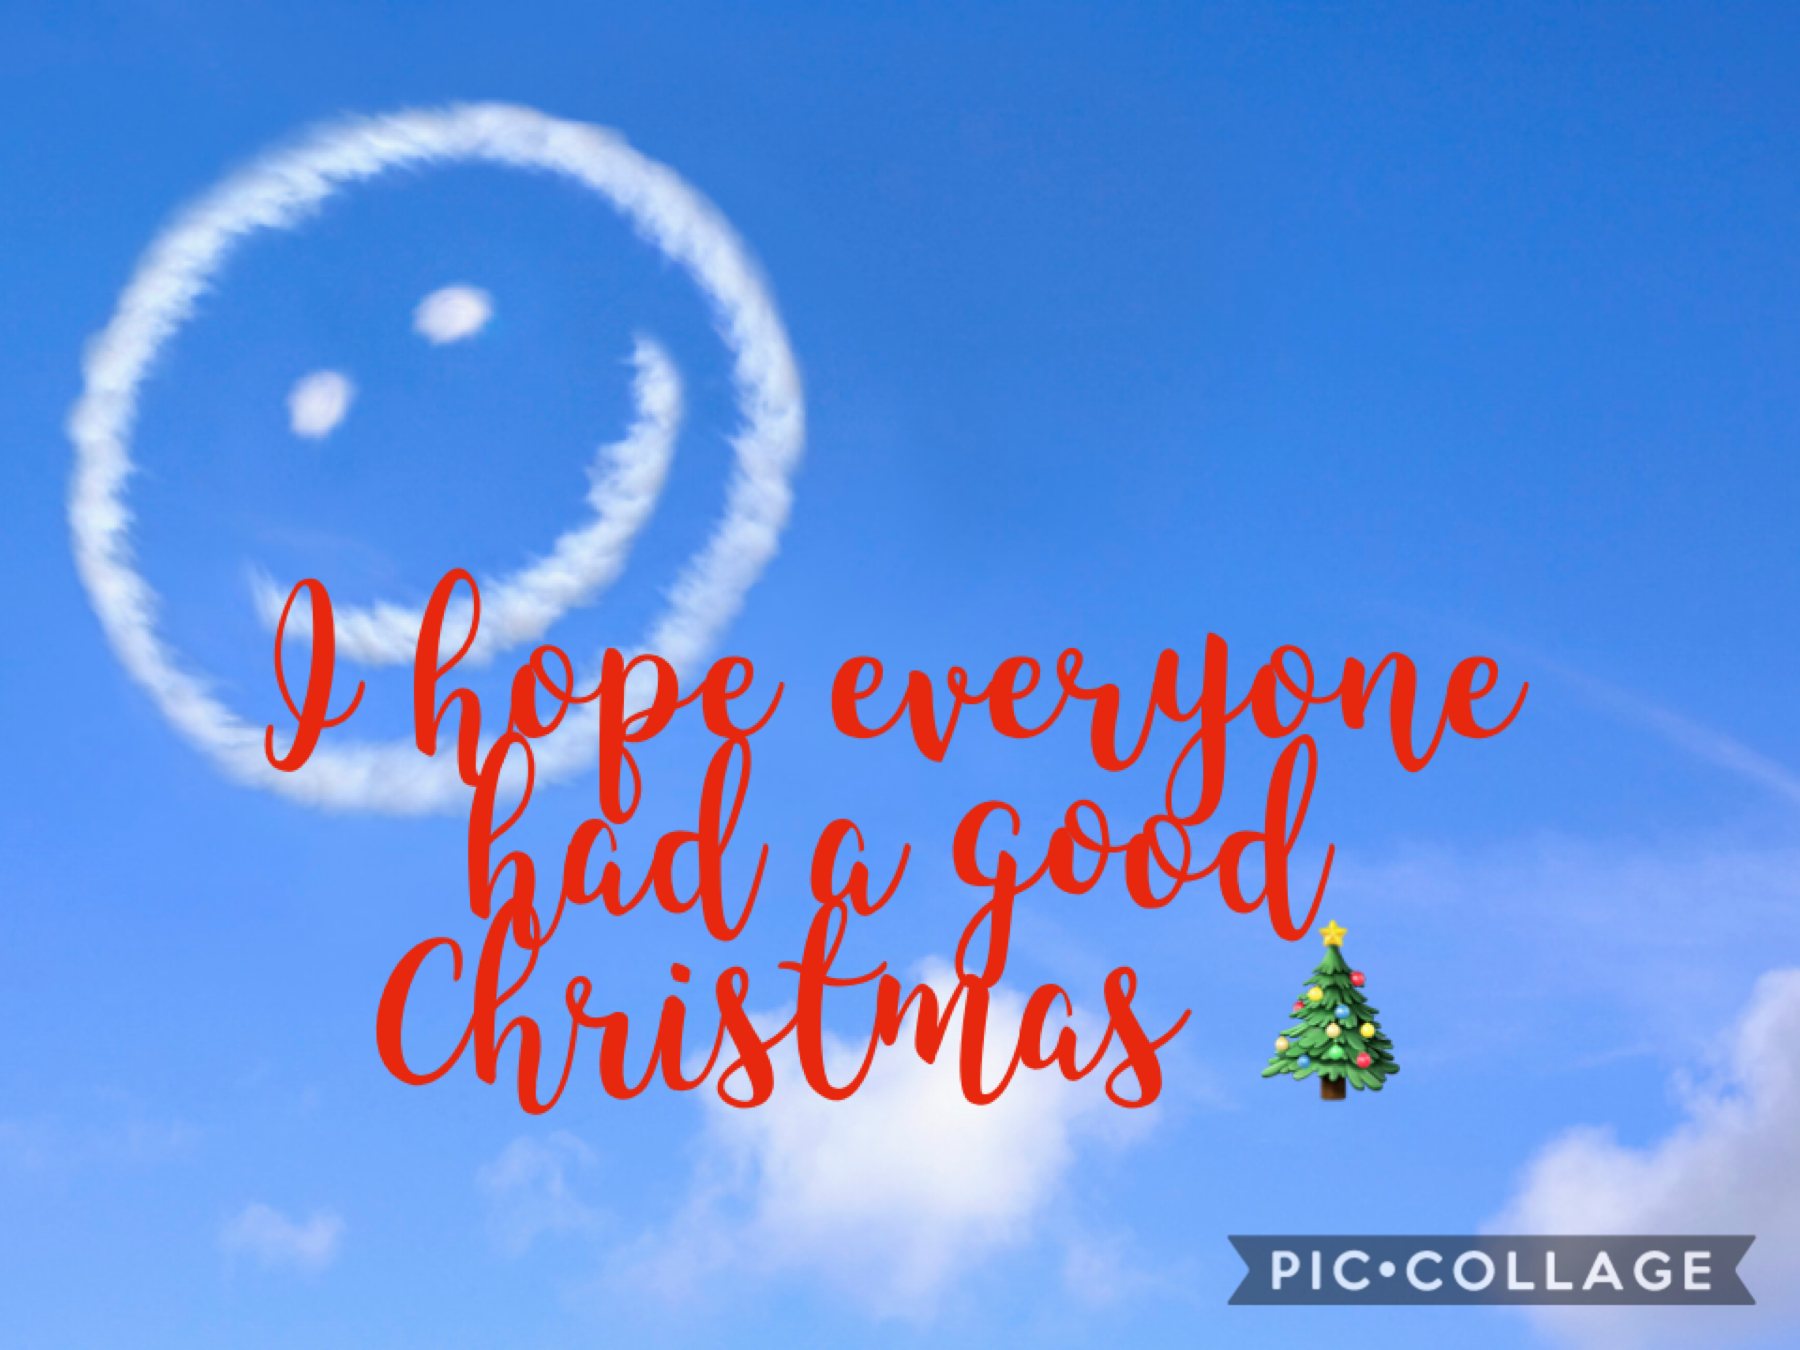 I hope everyone had a great Christmas 🎄😀